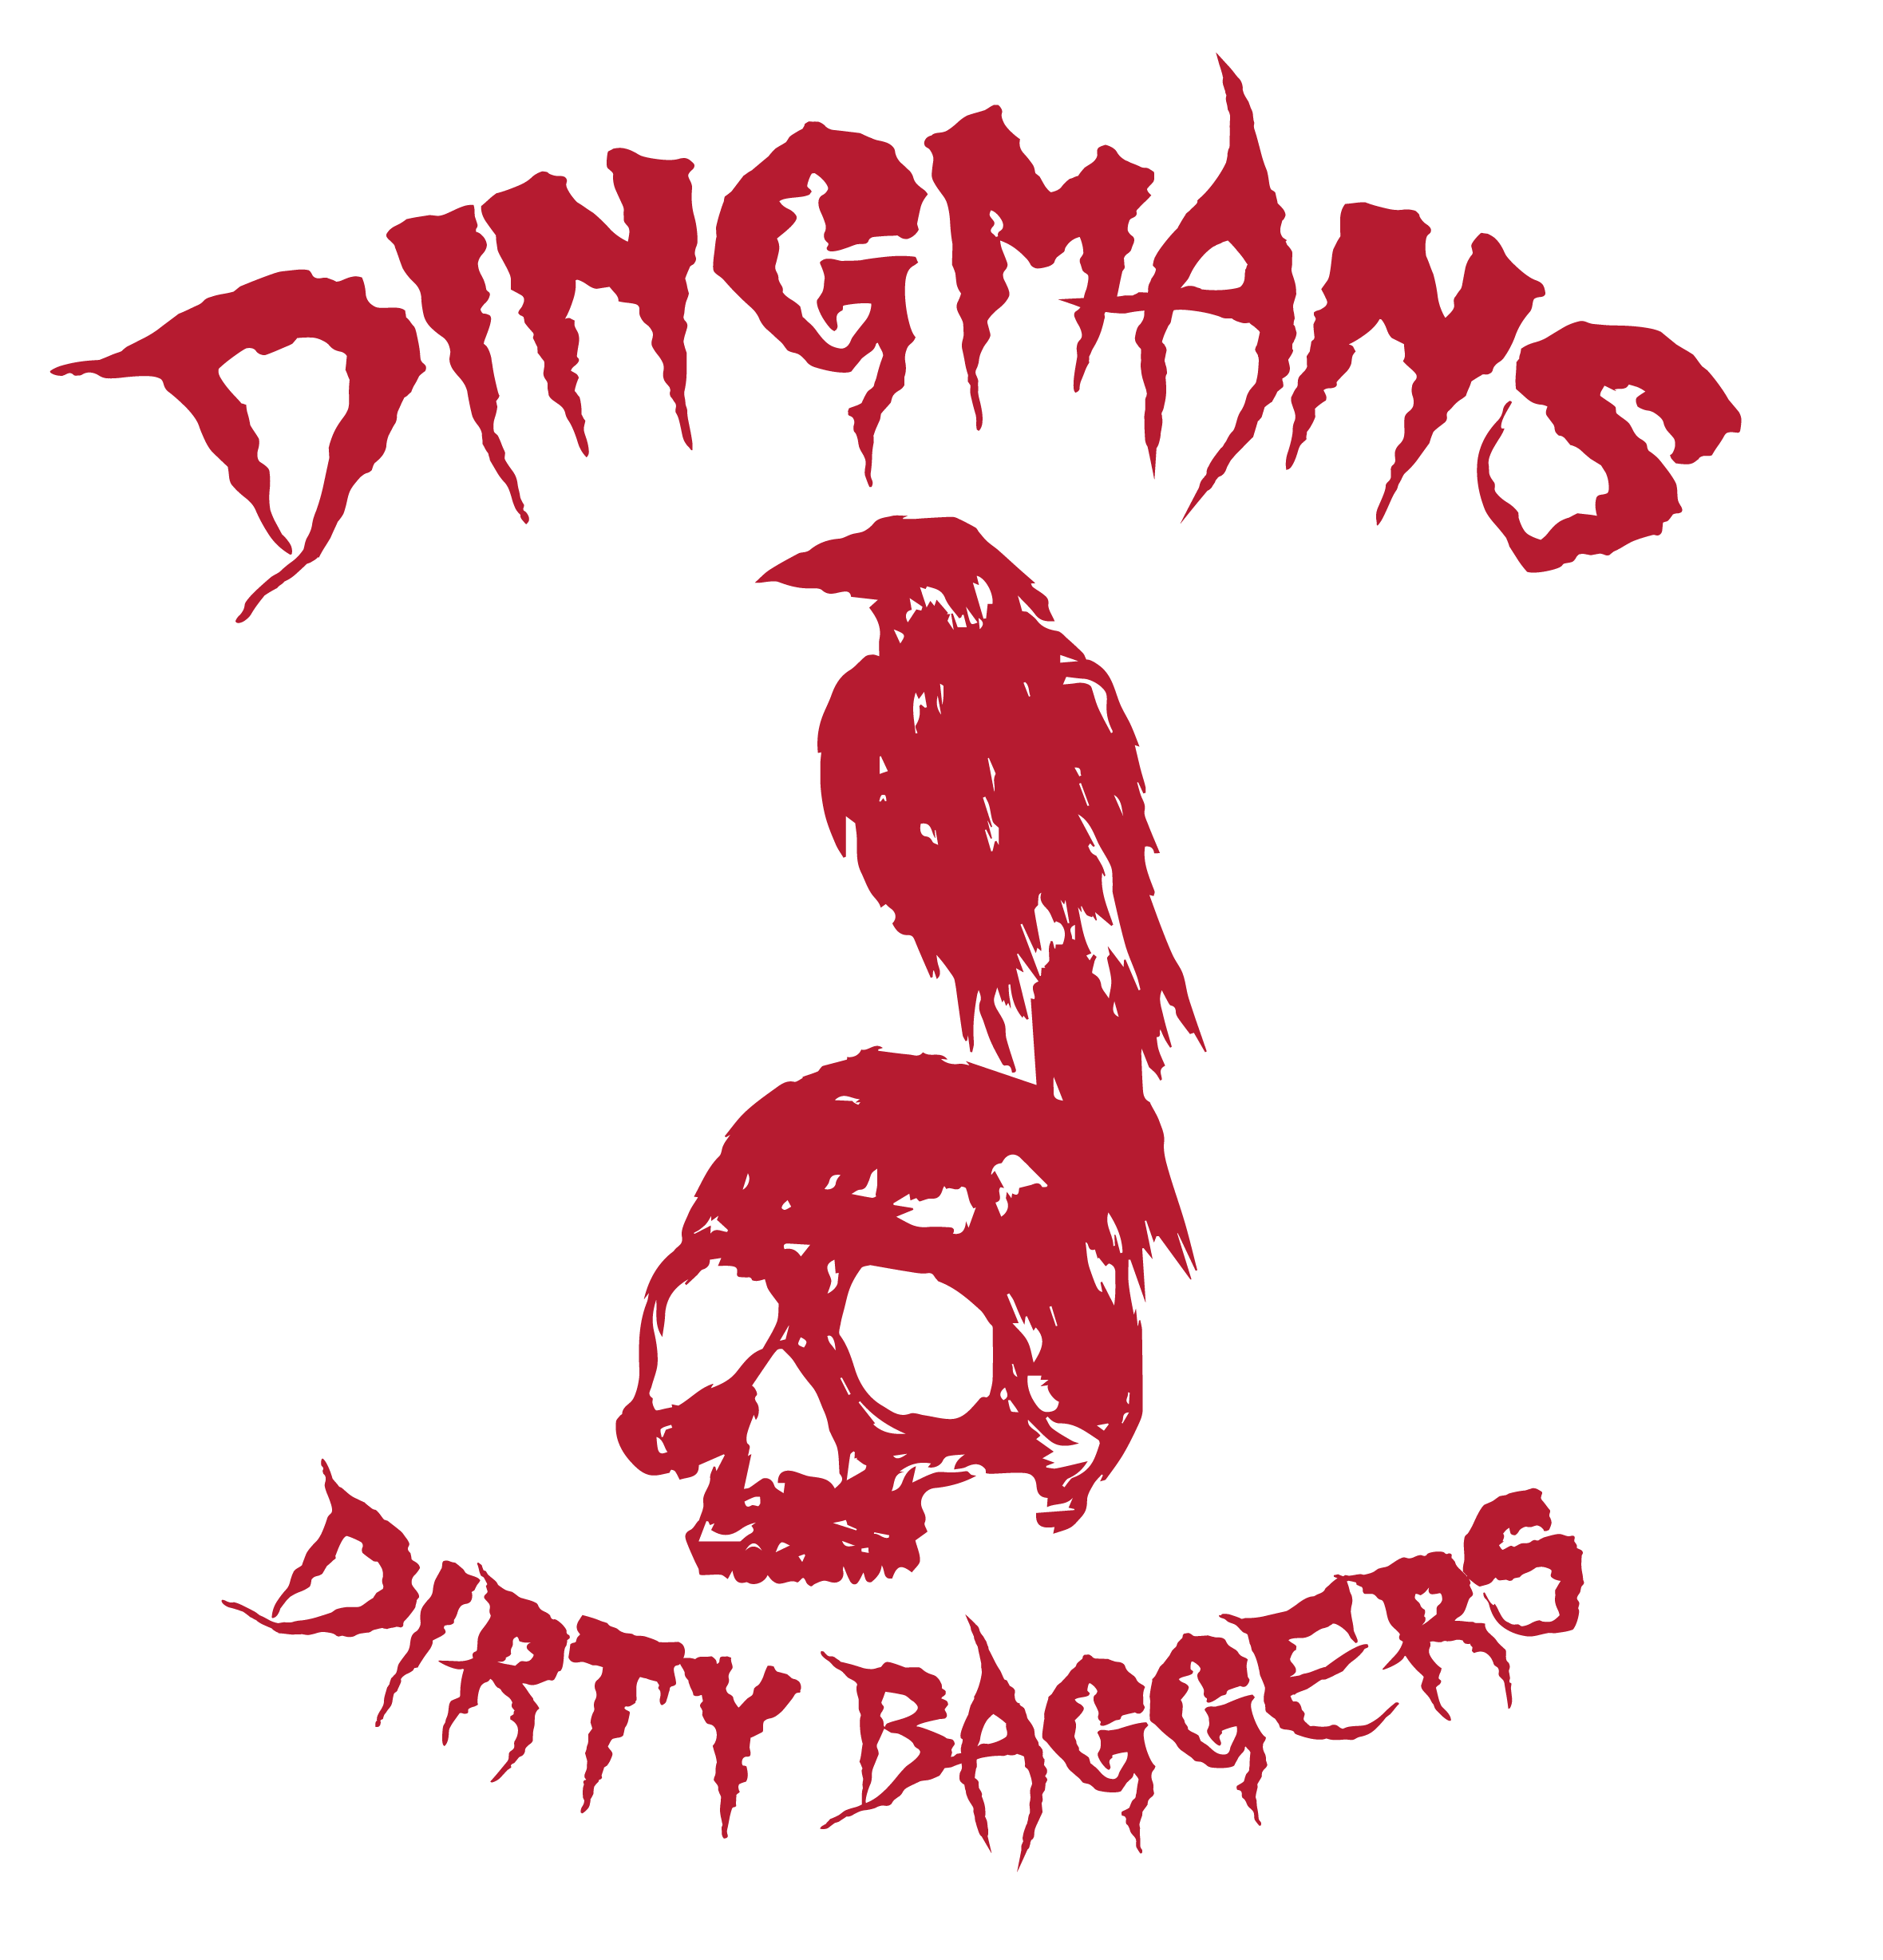 Dingmans Dirty Baggers